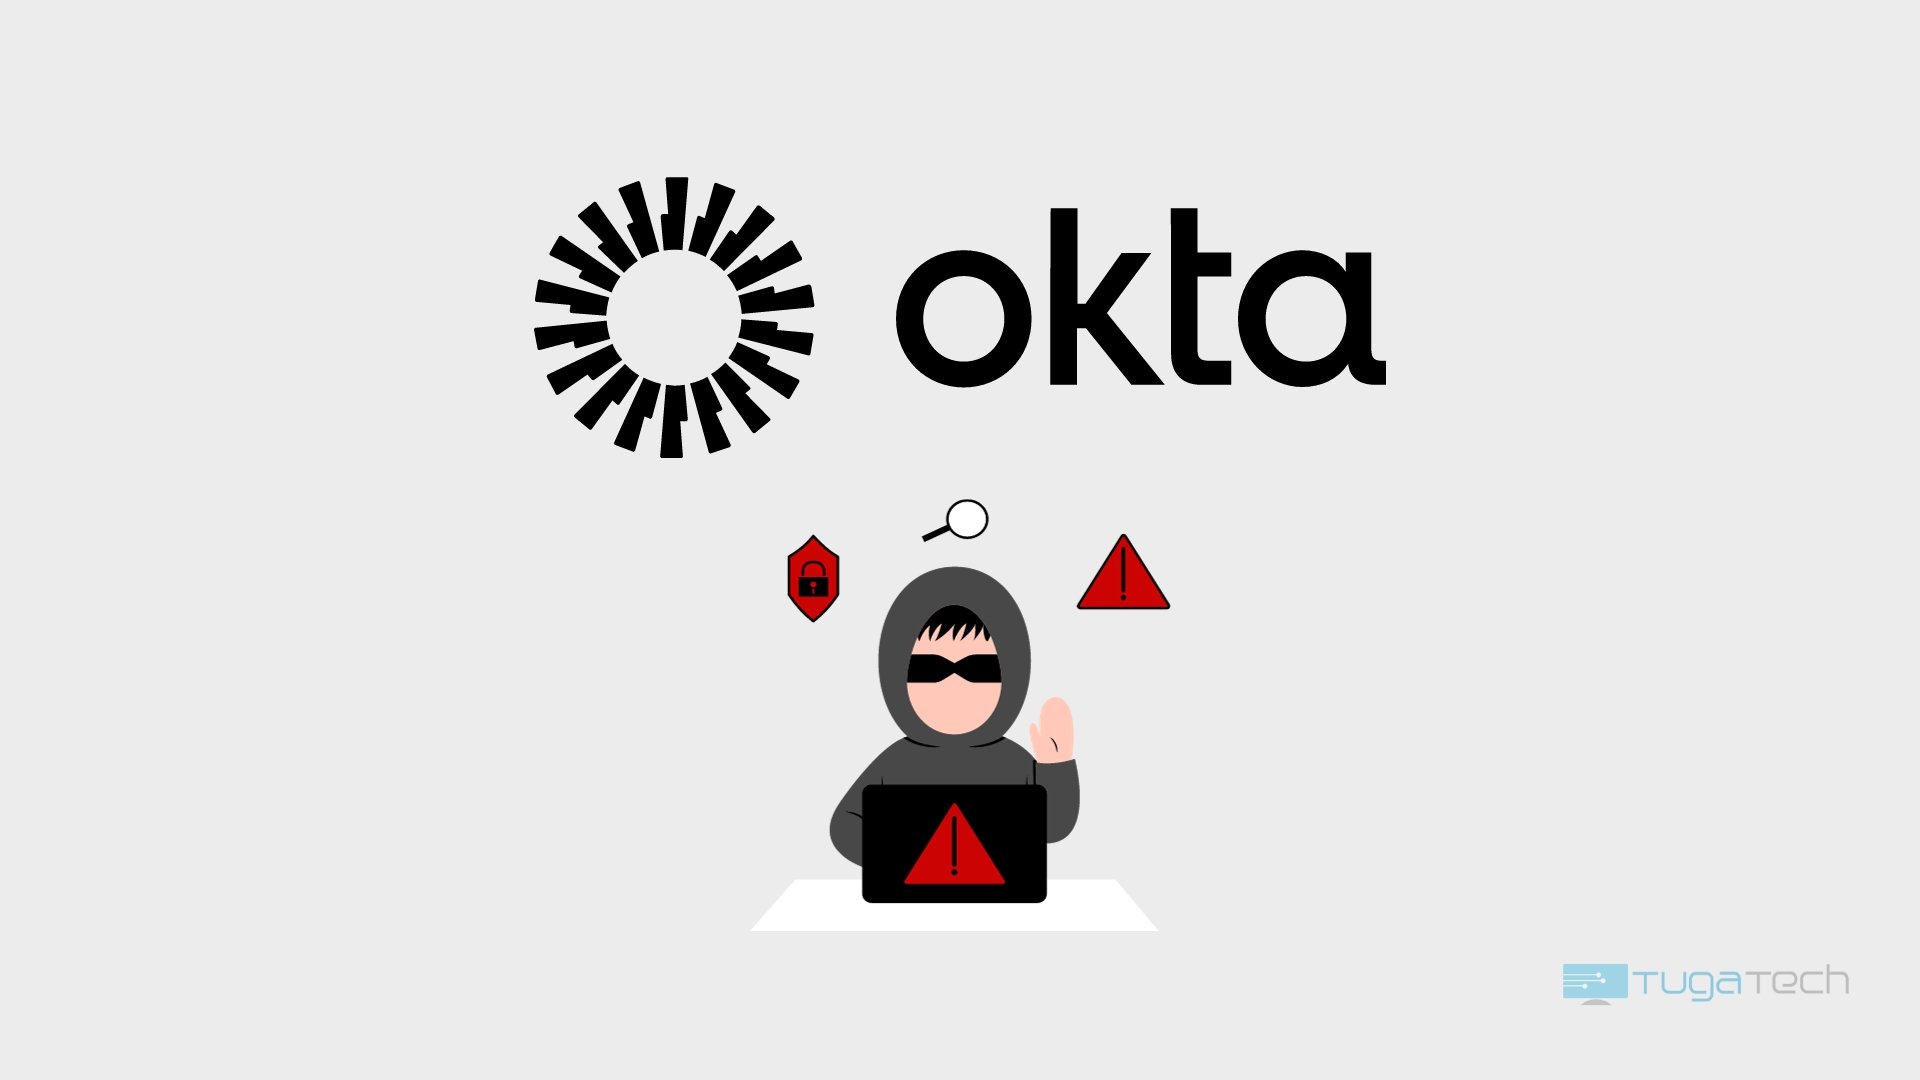 Okta confirma que hackers acederam a dados de clientes